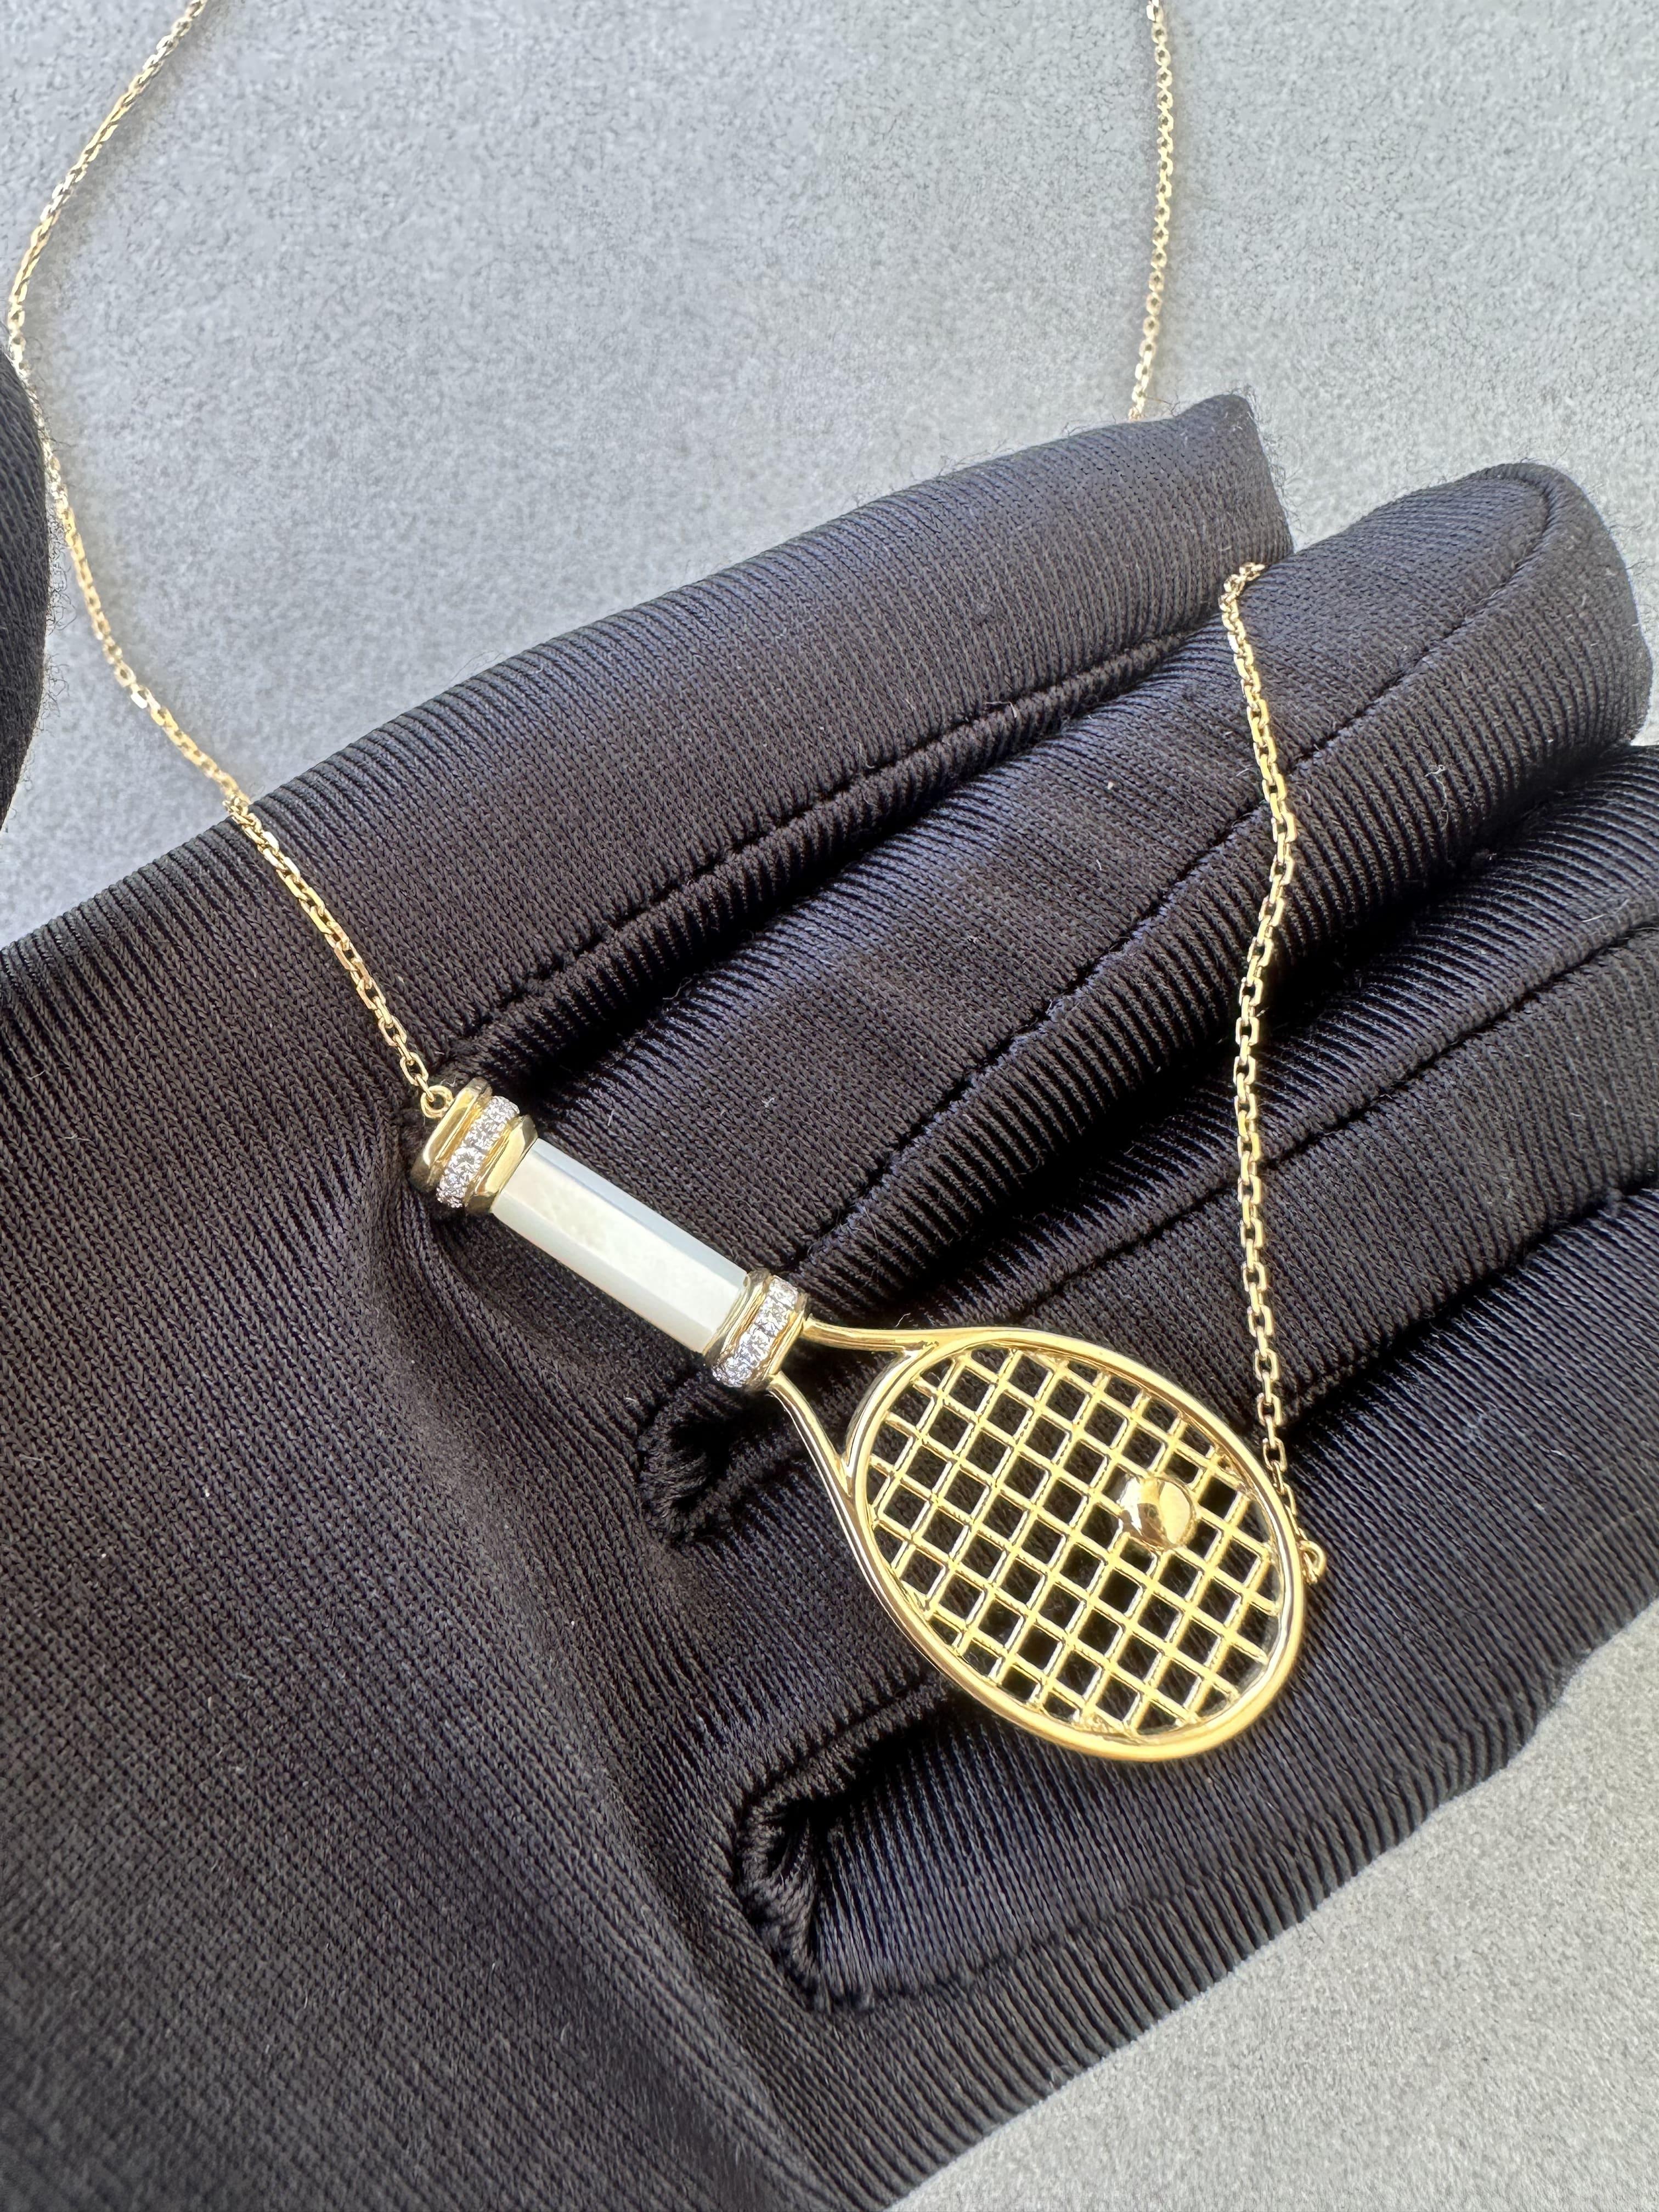 Diamond White Pearl Emerald 18 Karat Gold Tennis Racket Charm Pendant Necklace For Sale 4